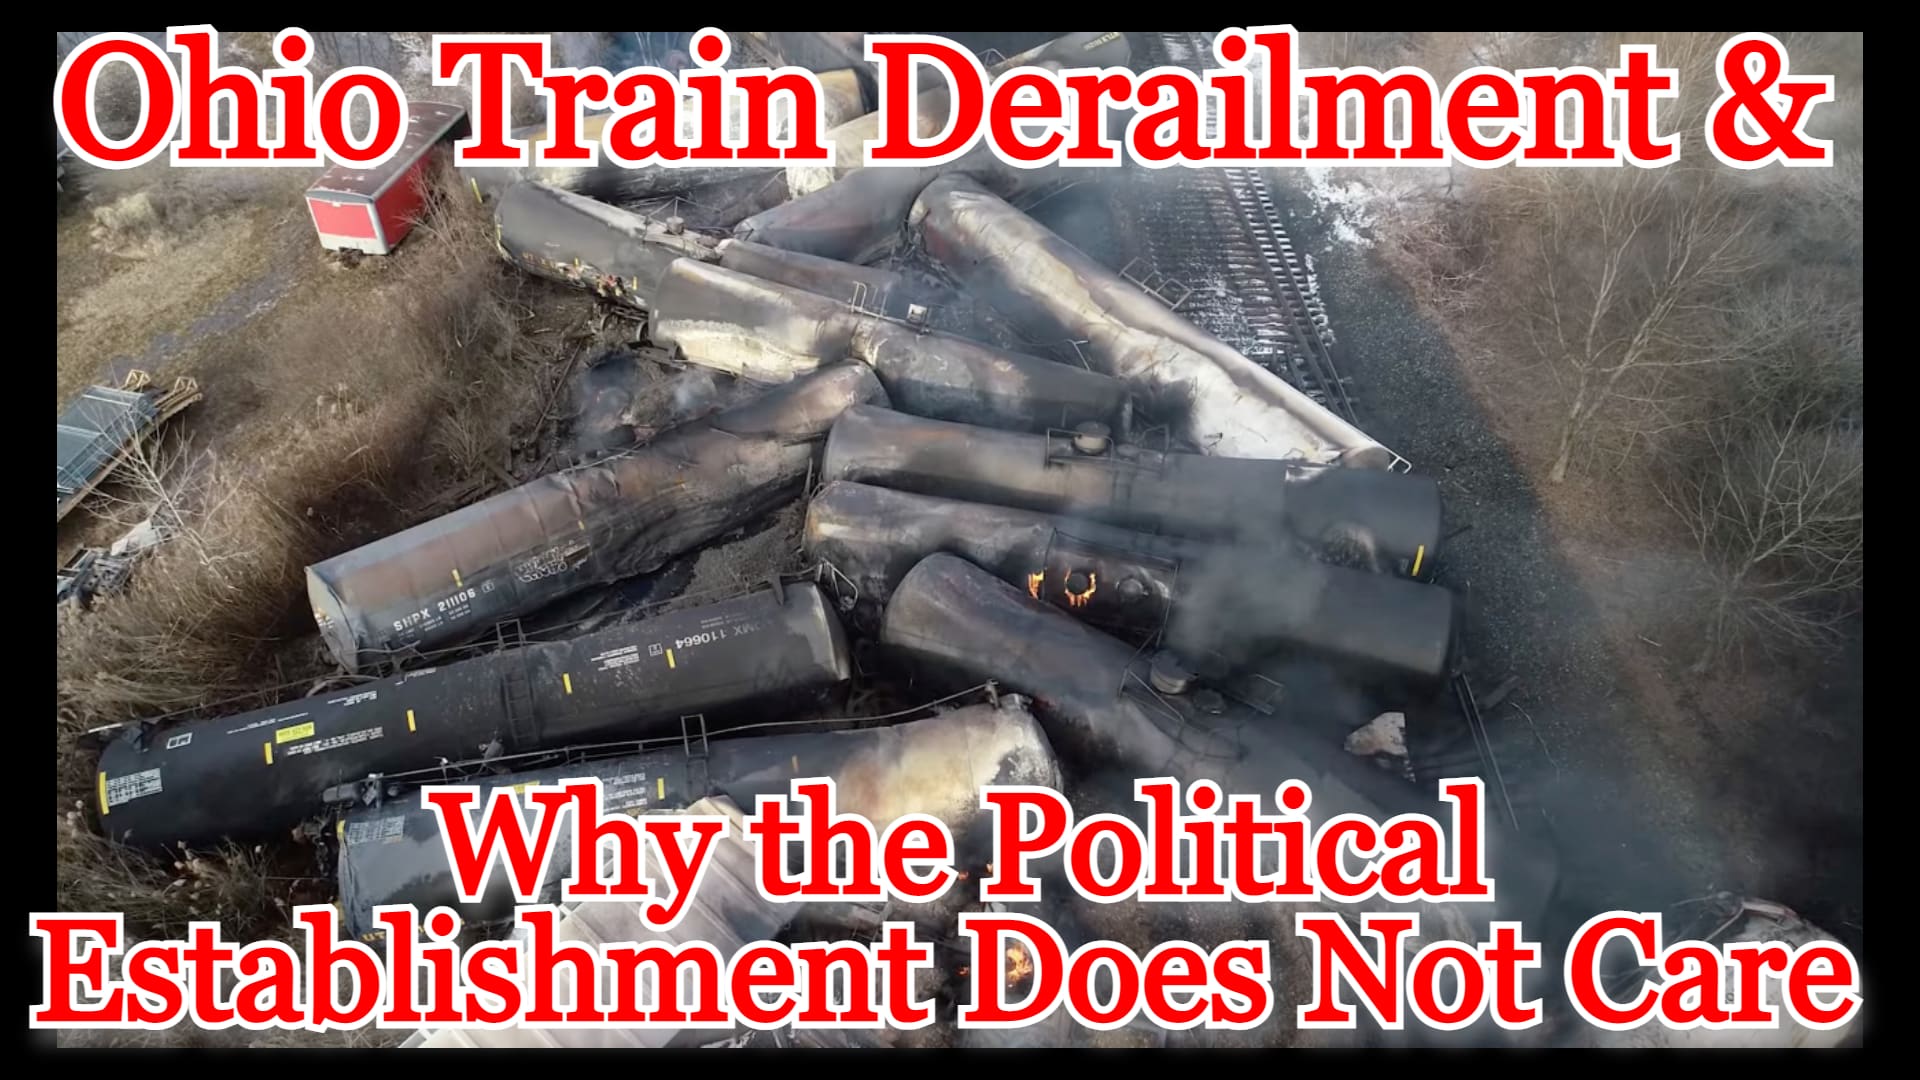 COI #384: Ohio Train Derailment & Why the Political Establishment Does Not Care guest Misty Winston